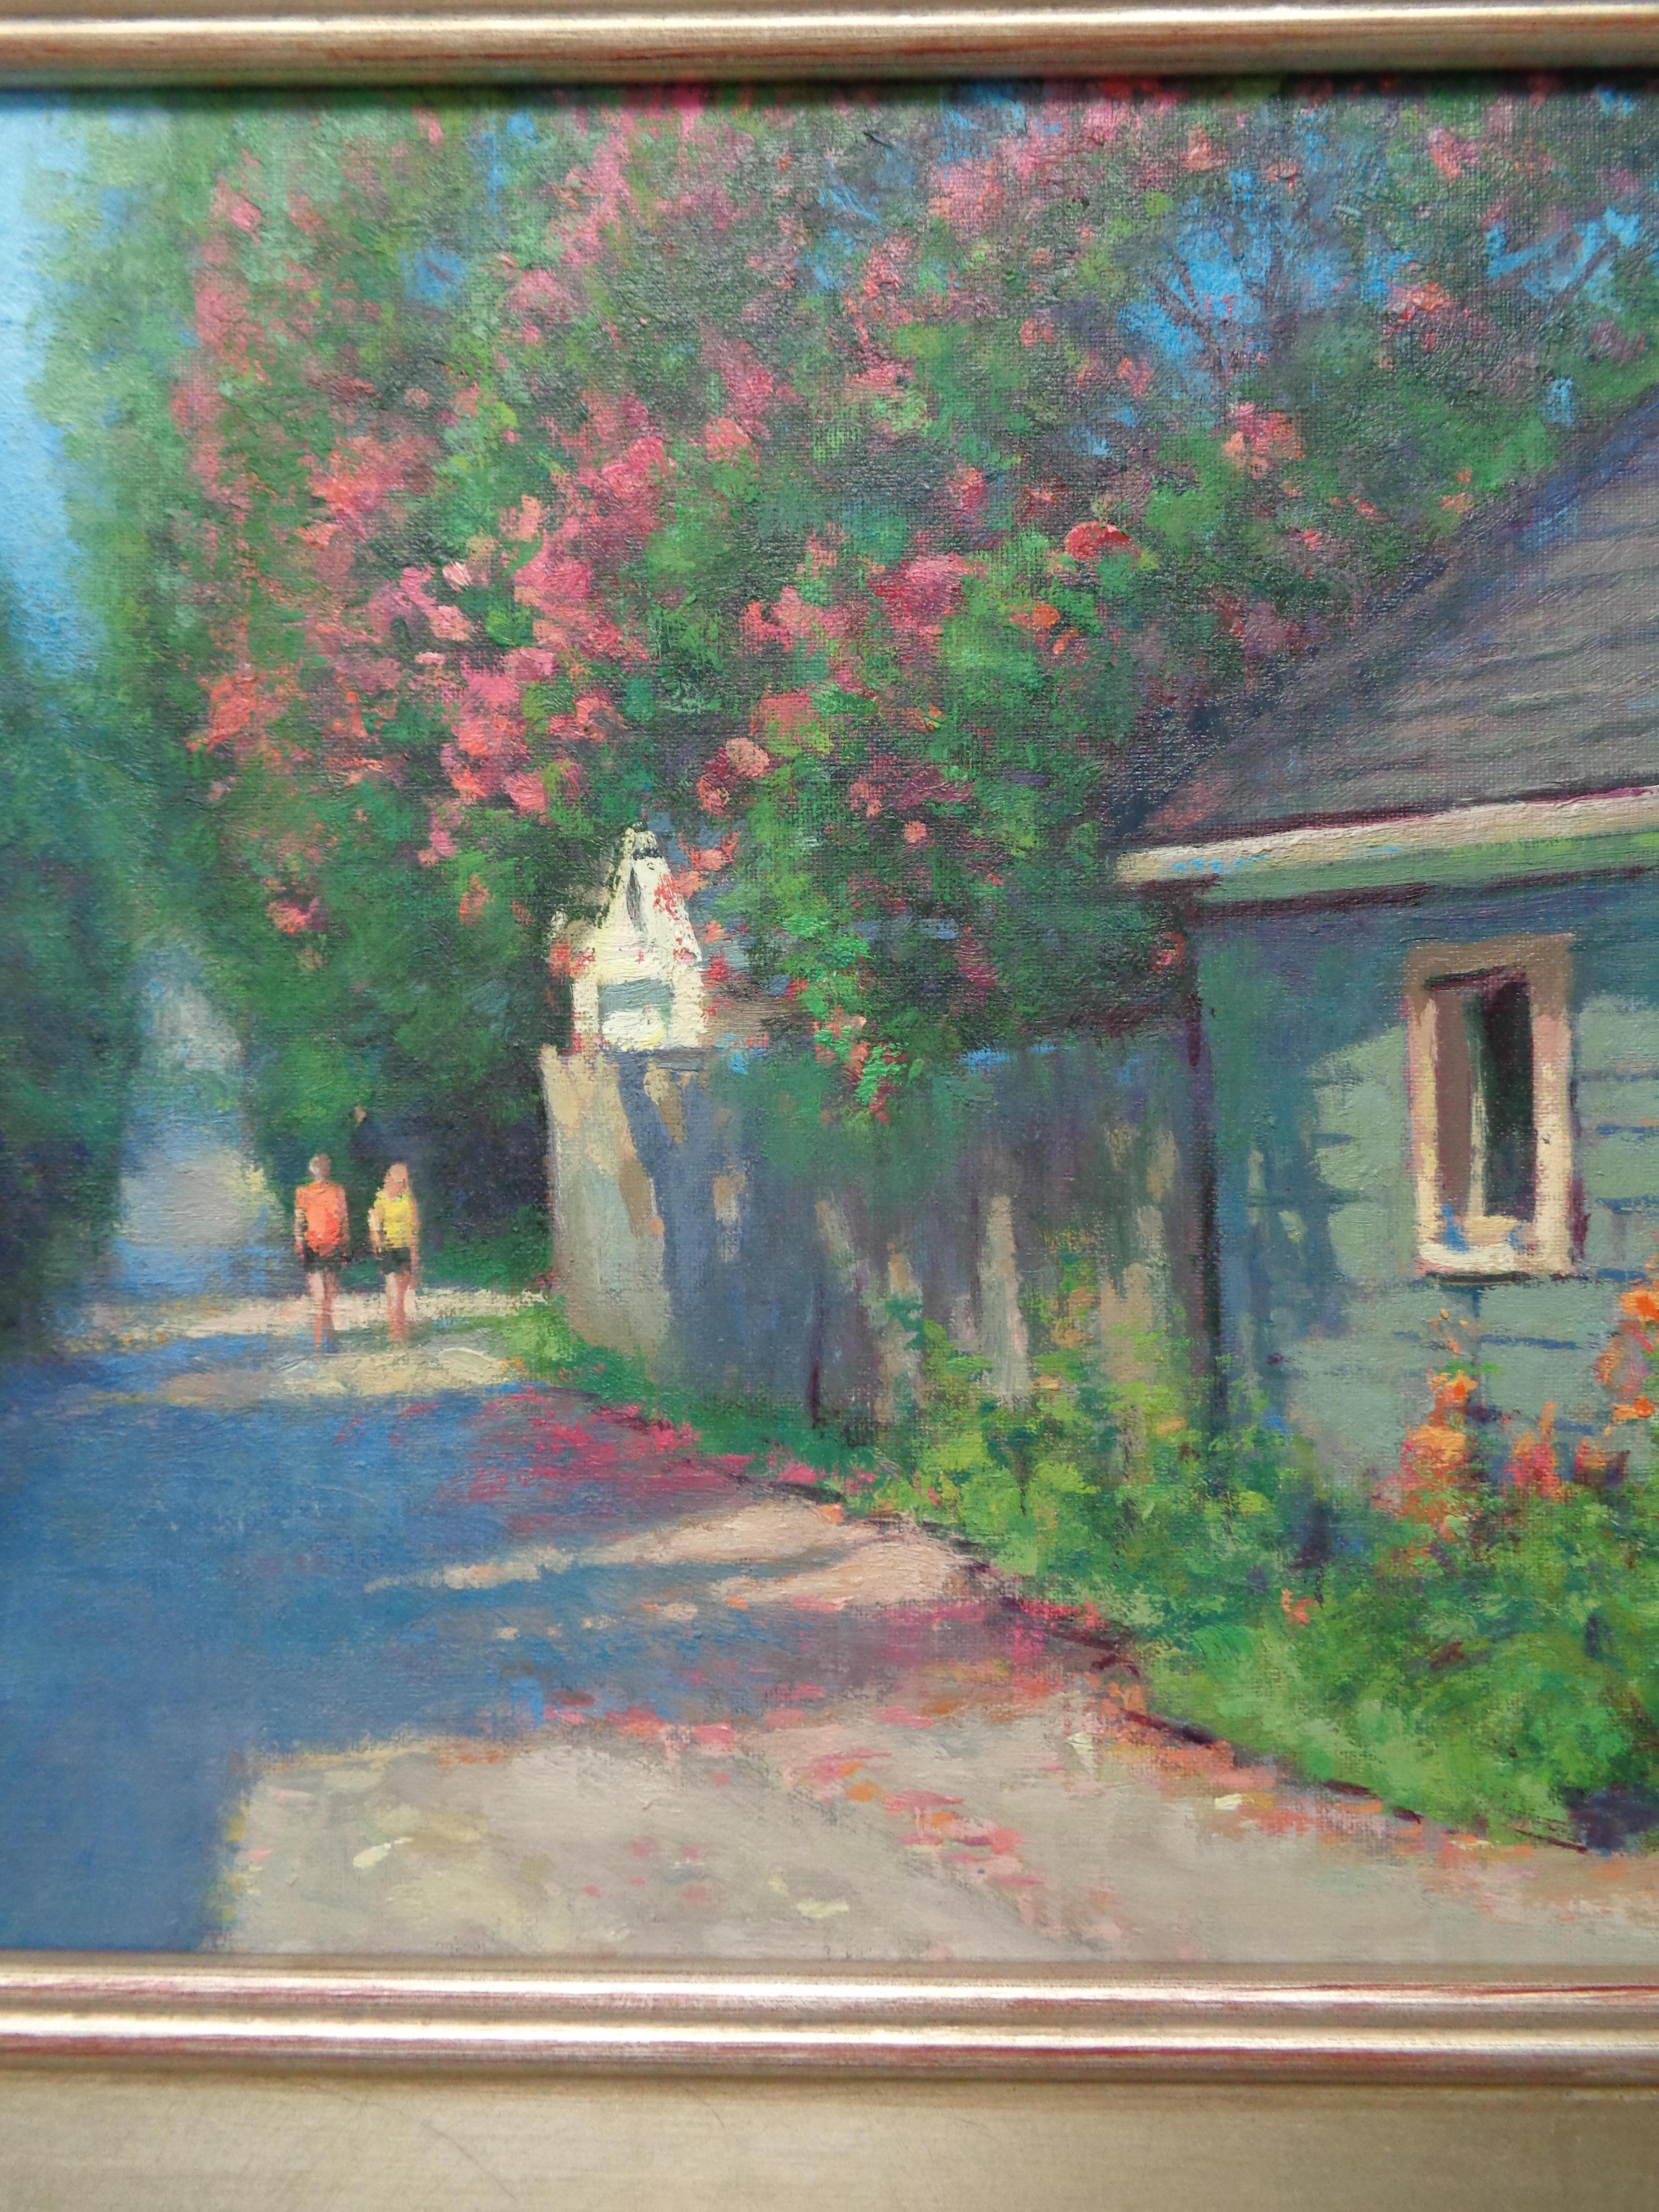  Impressionistic Floral Landscape Painting Michael Budden Alley Walk 2